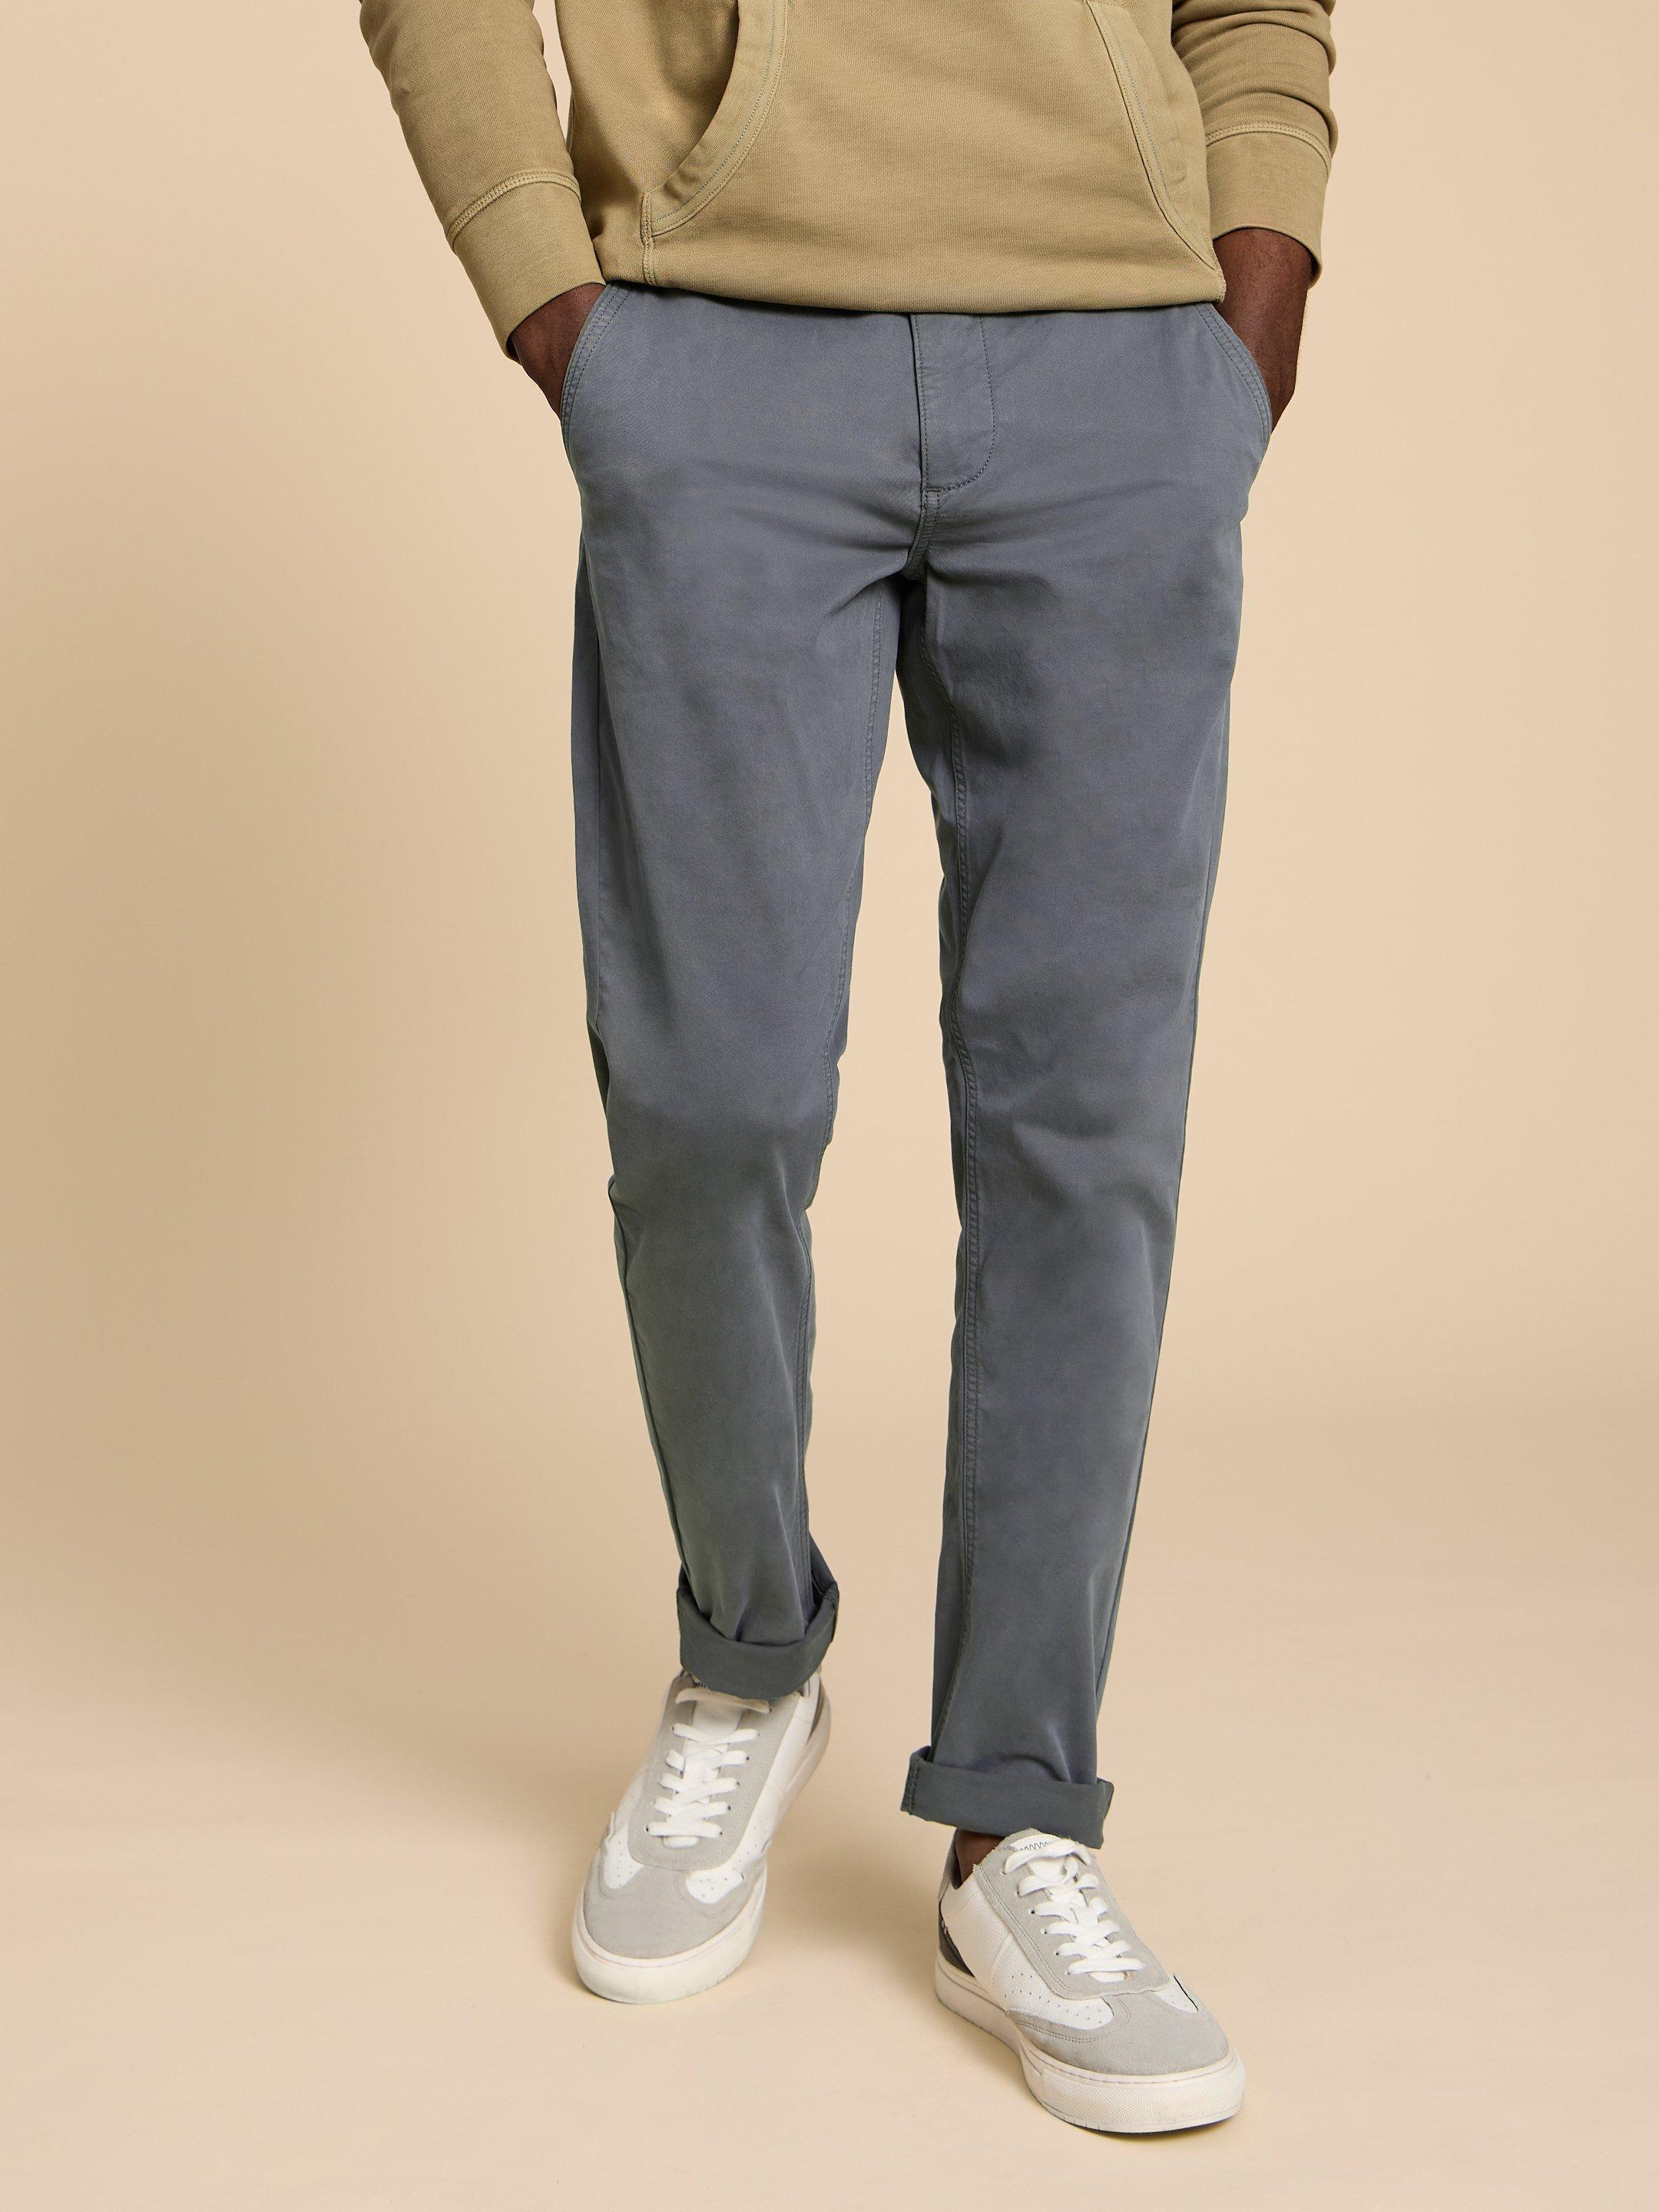 Sutton Organic Chino Trouser in DK GREY - MODEL DETAIL